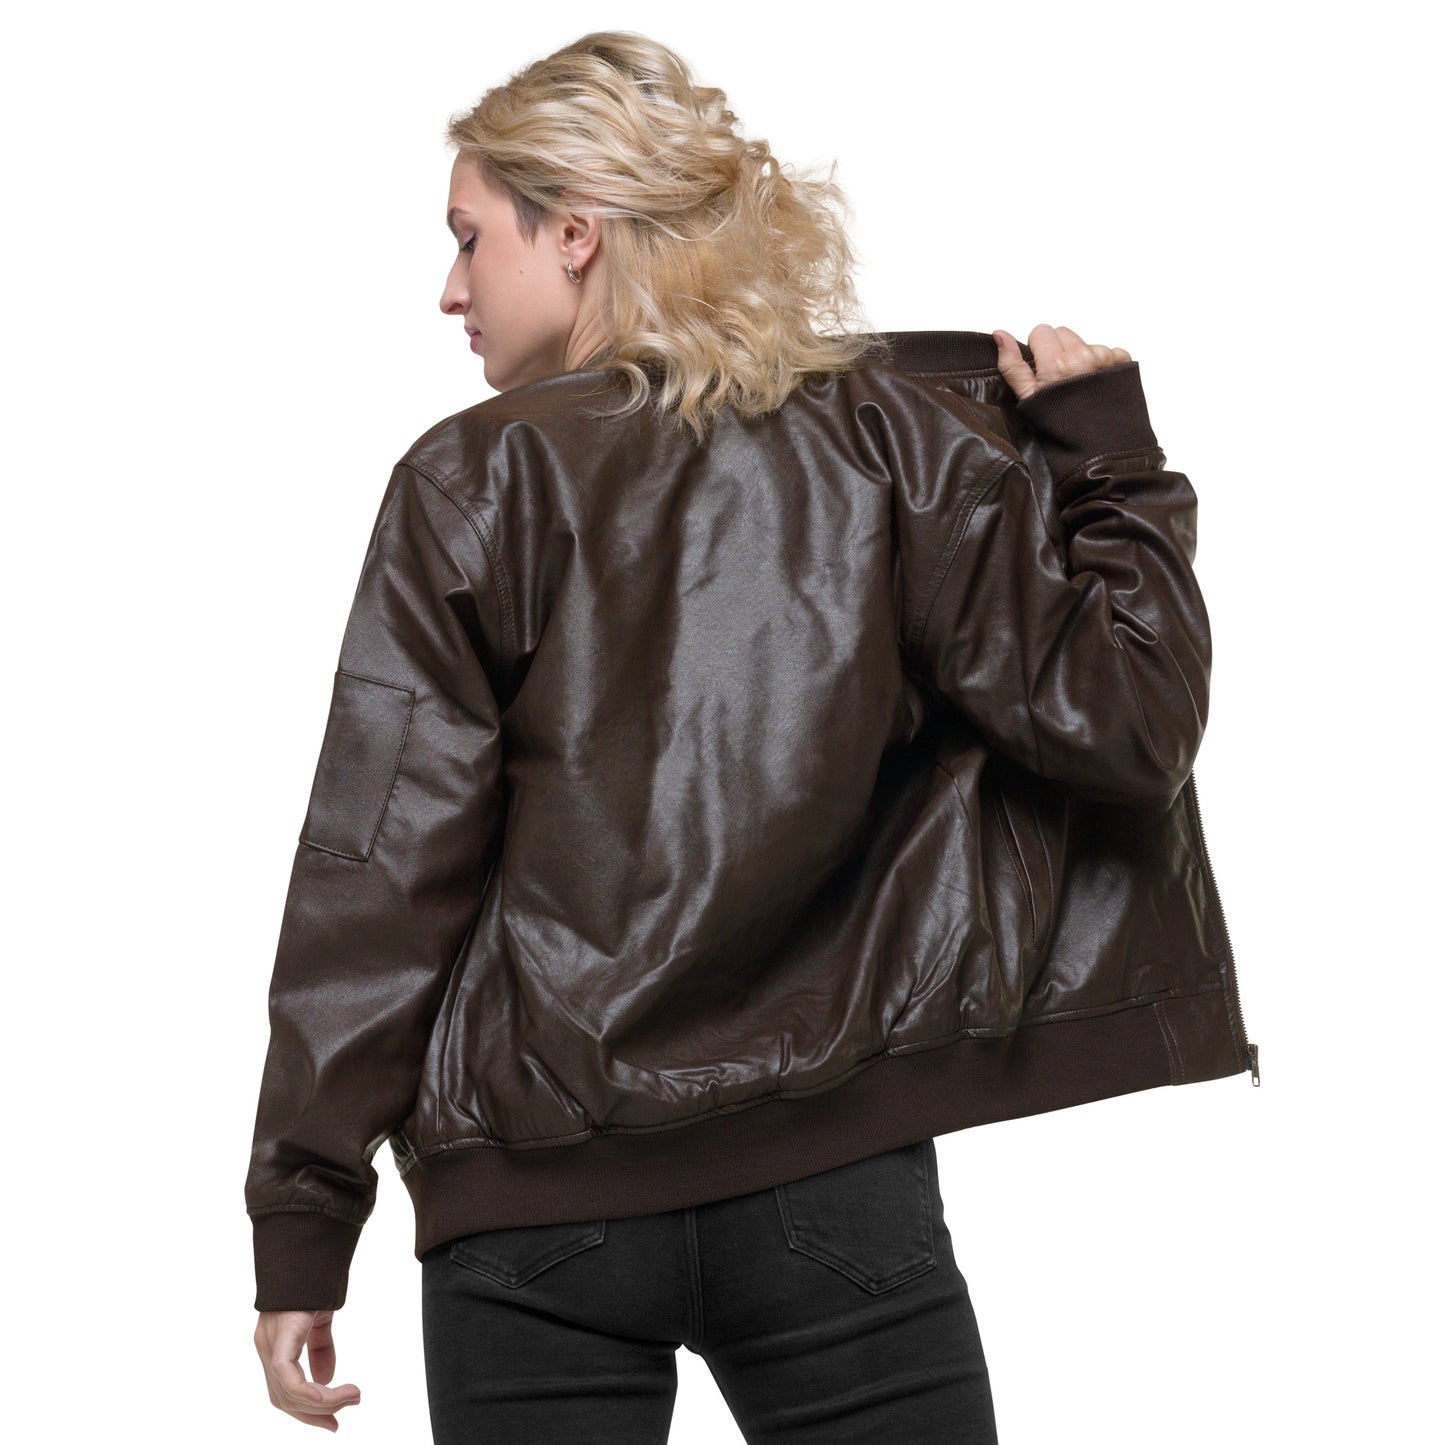 Leather Bomber Jacket - Short, Sweet, Fierce